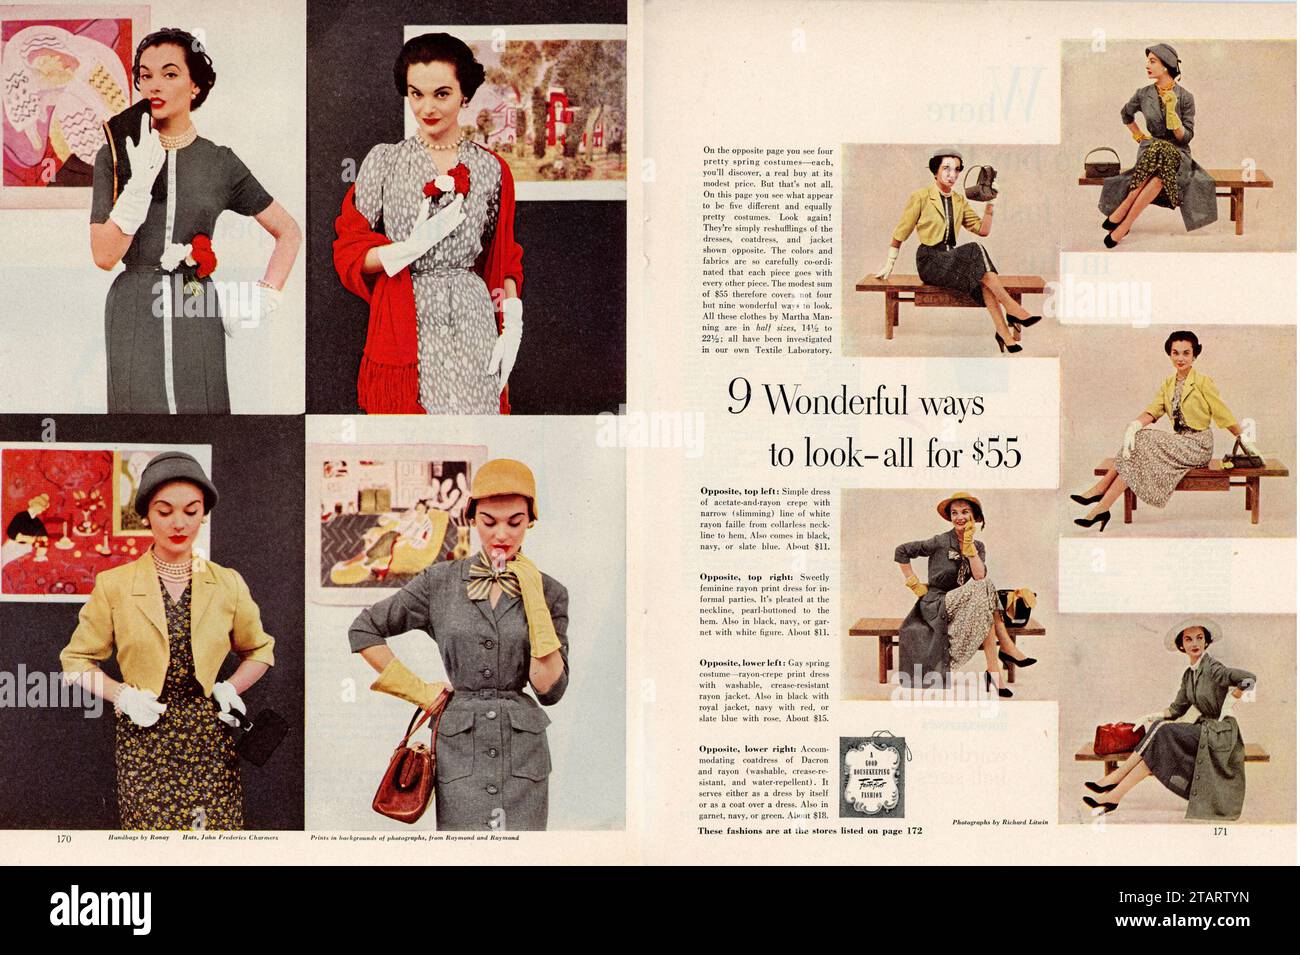 https://c8.alamy.com/comp/2TARTYN/vintage-good-housekeeping-magazine-january-1953-issue-advert-united-states-2TARTYN.jpg